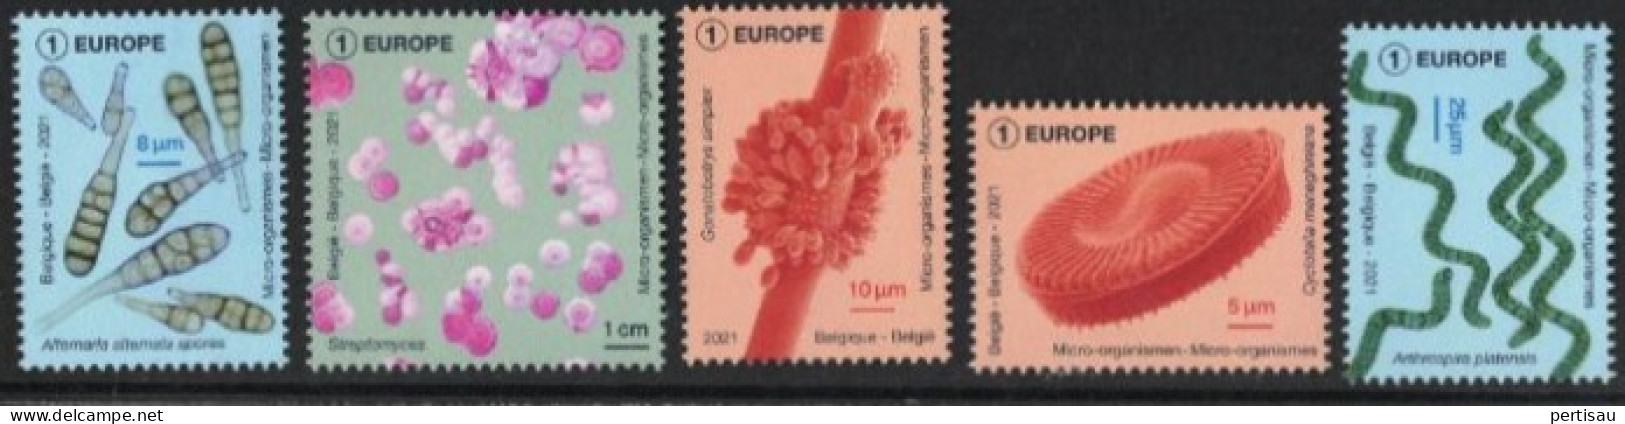 Micro-organismen 2021 - Unused Stamps